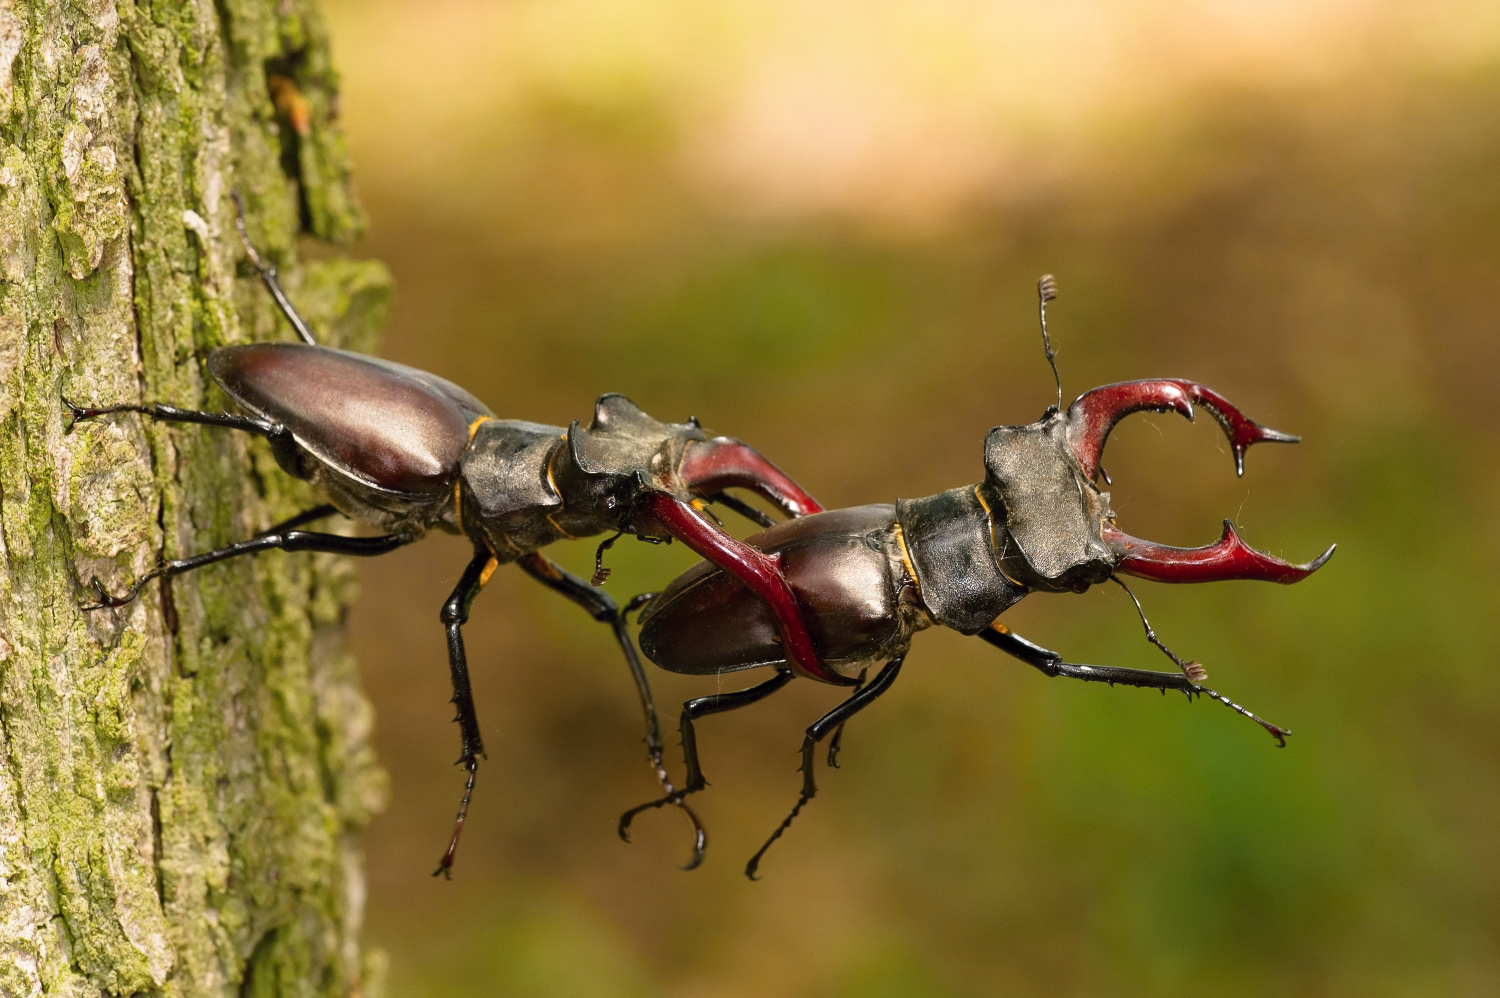 roháč obecný (Lucanus cervus) Stag beetles